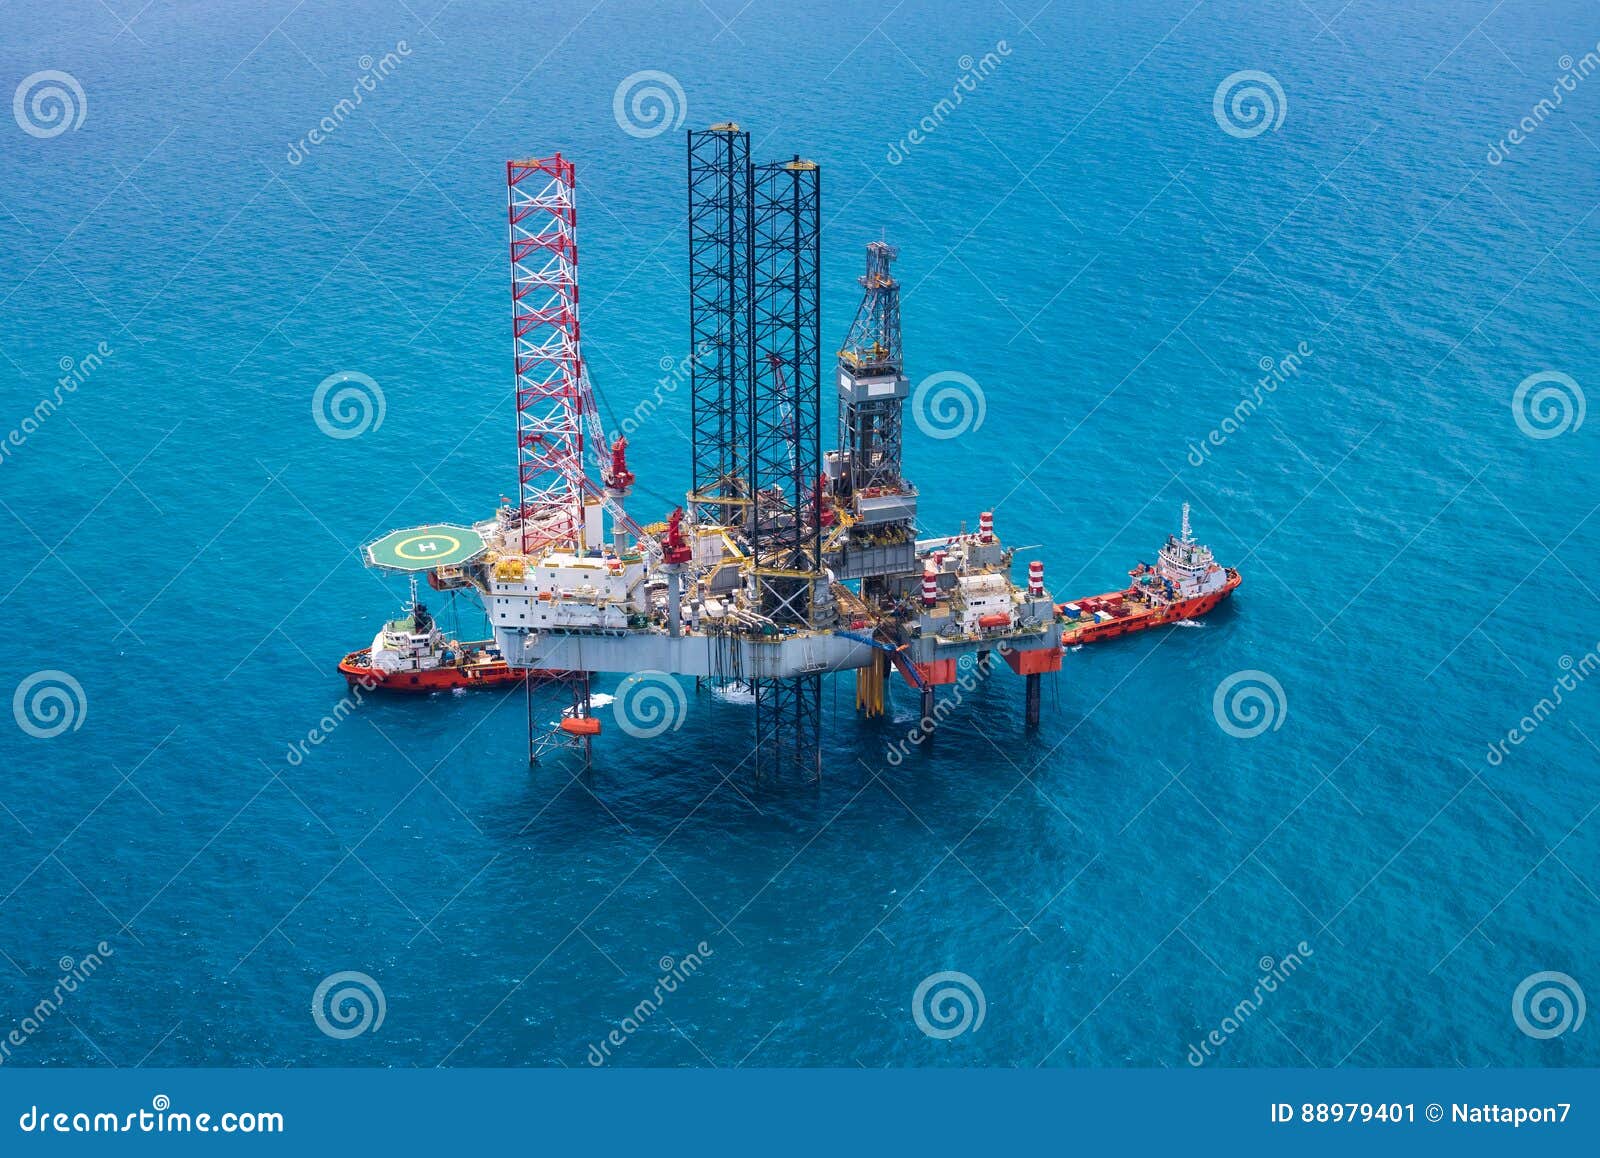 Offshore Oil Rig Drilling Platform. Stock Image - Image of ...